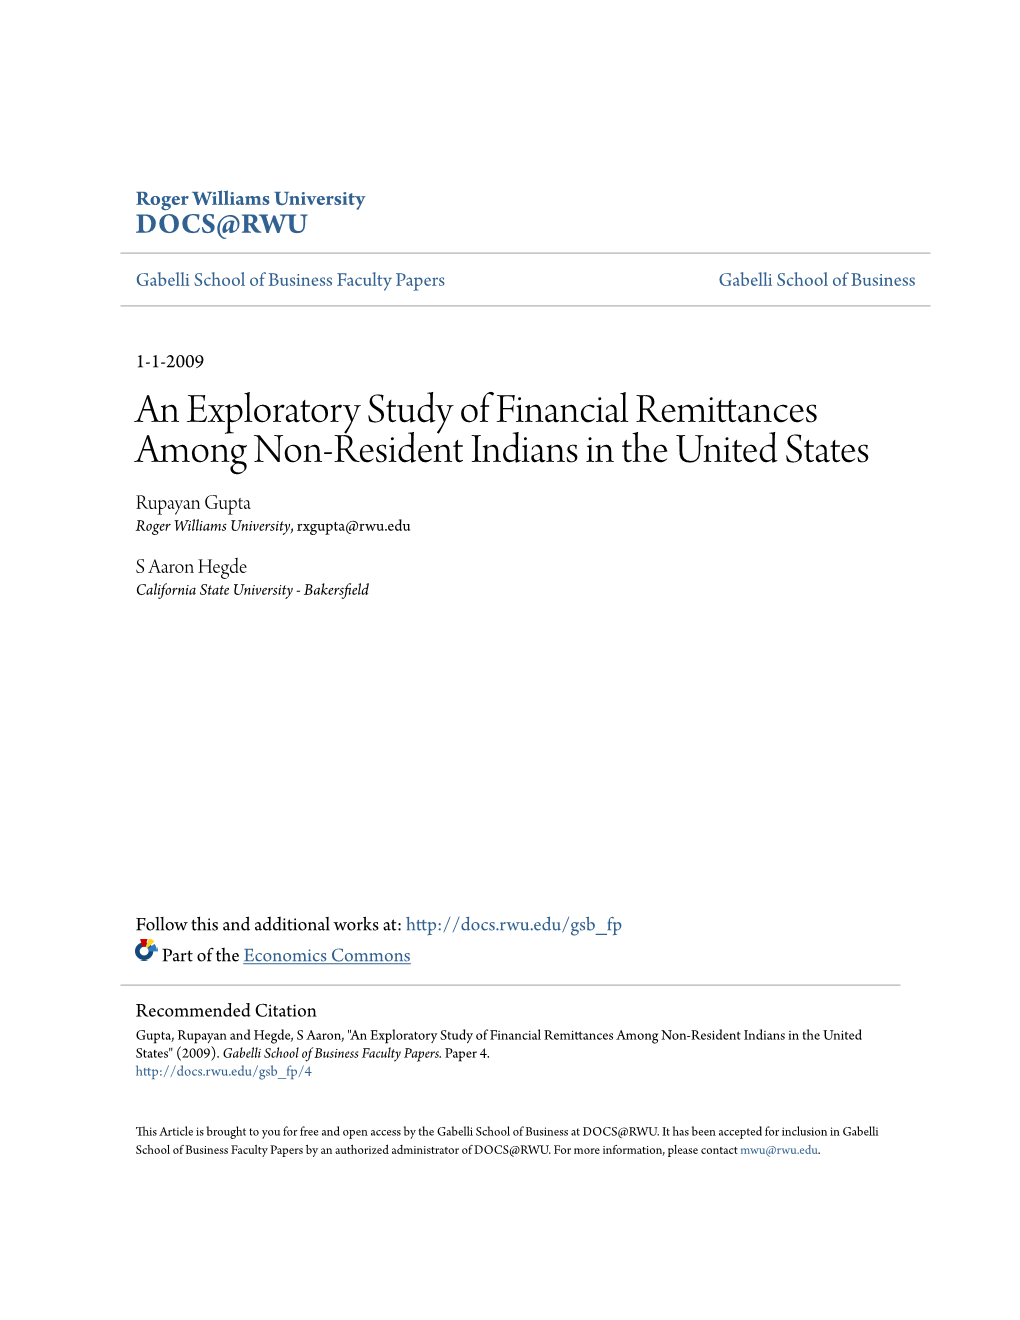 An Exploratory Study of Financial Remittances Among Non-Resident Indians in the United States Rupayan Gupta Roger Williams University, Rxgupta@Rwu.Edu